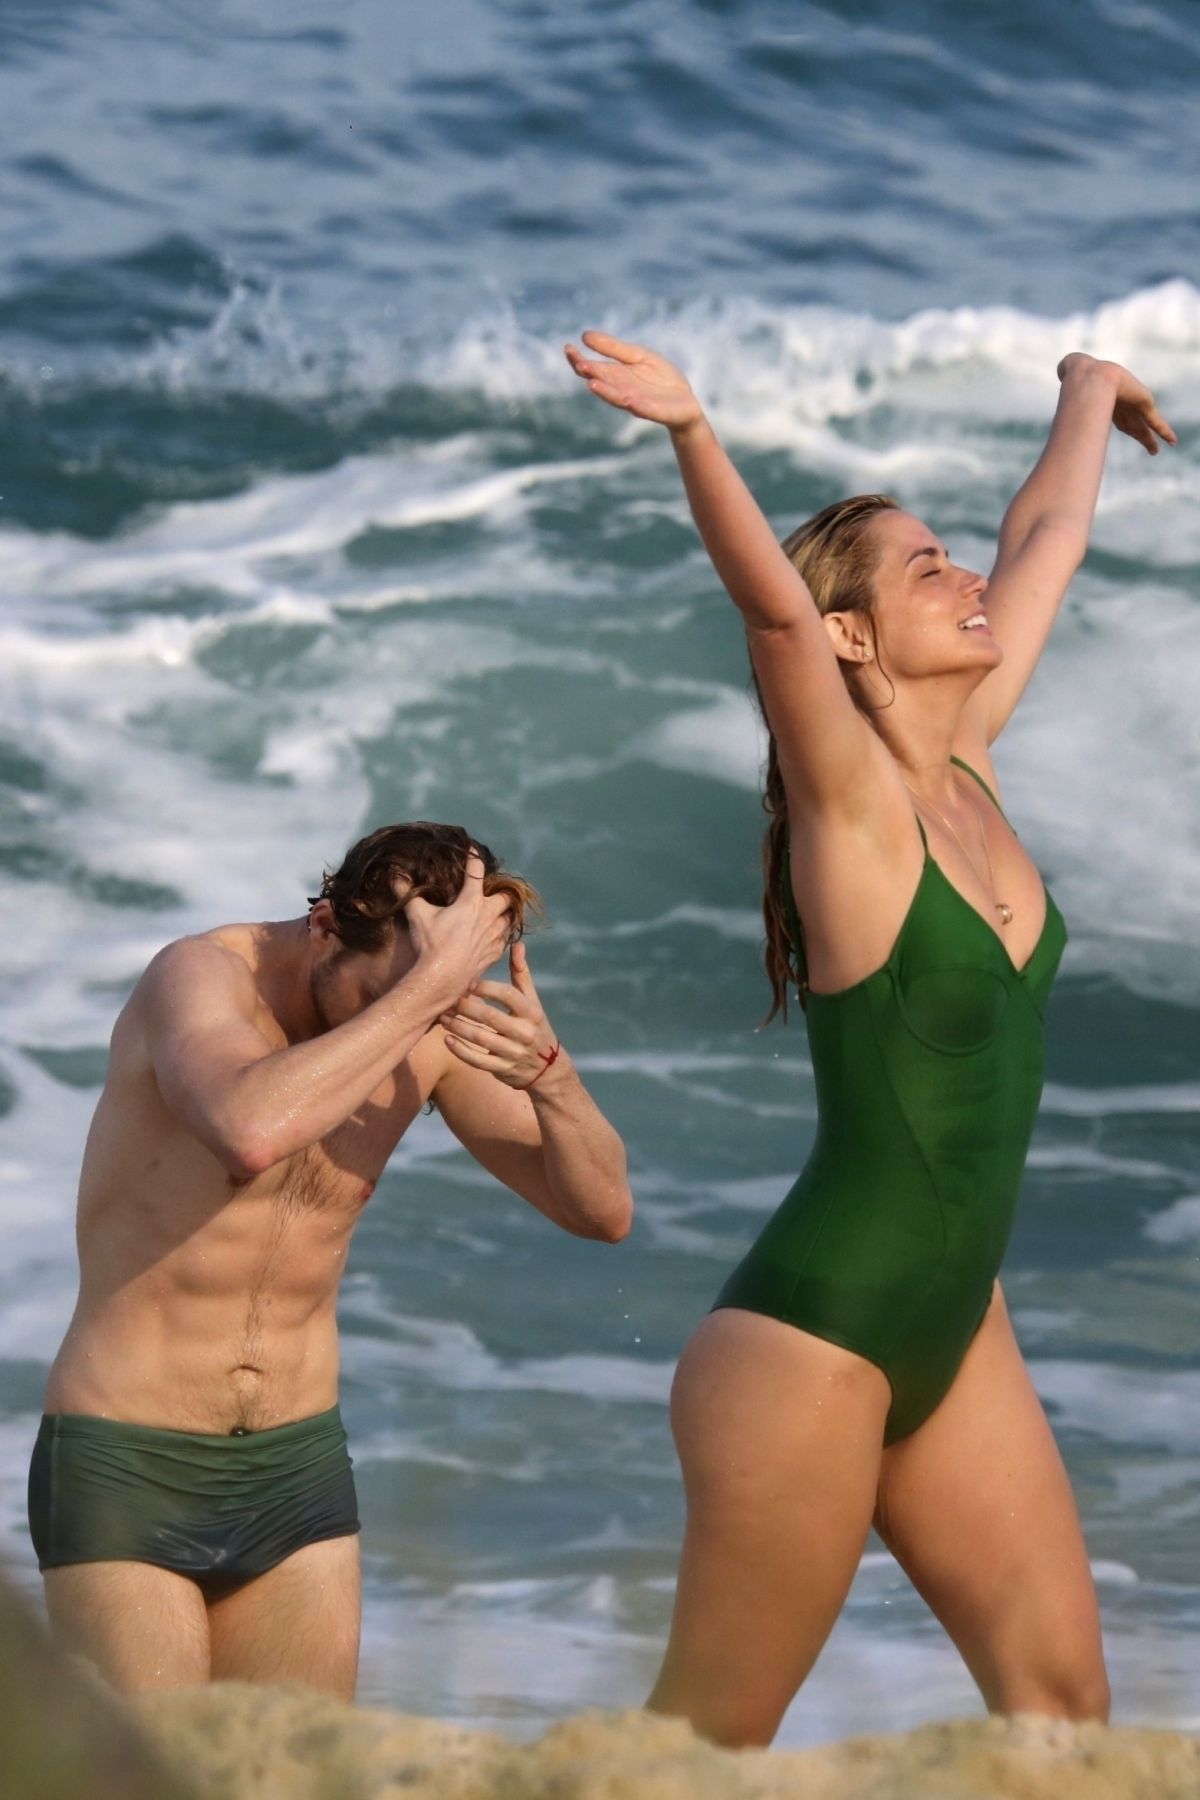 ANA DE ARMAS in Swimsuit and Bikini at a Beach in Rio De ...